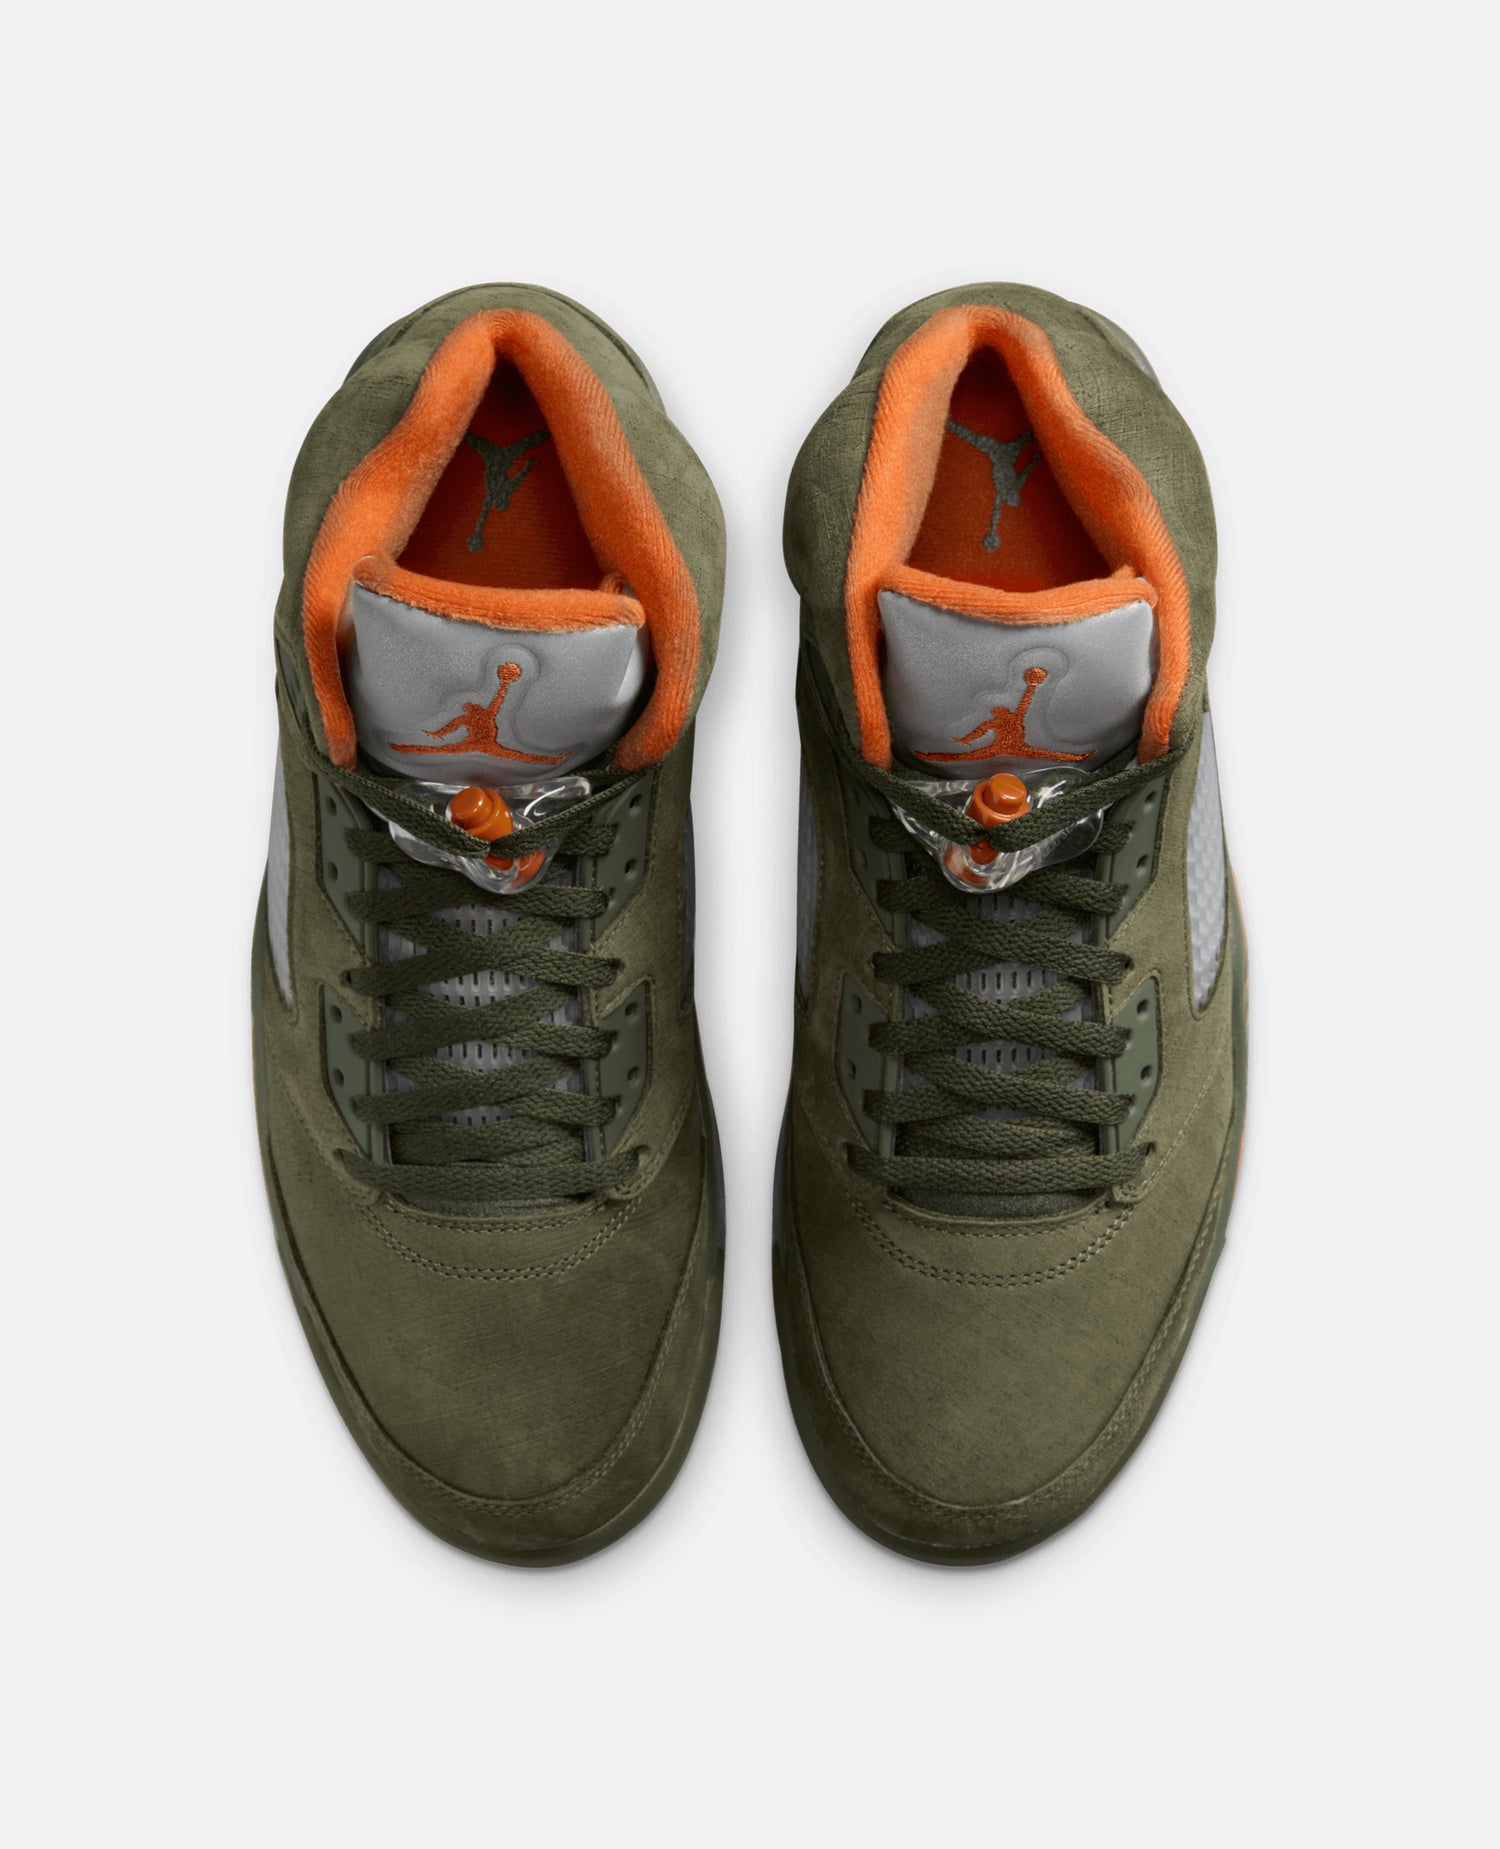 Nike Air Jordan 5 Retro (Oliva militare/Arancione solare)